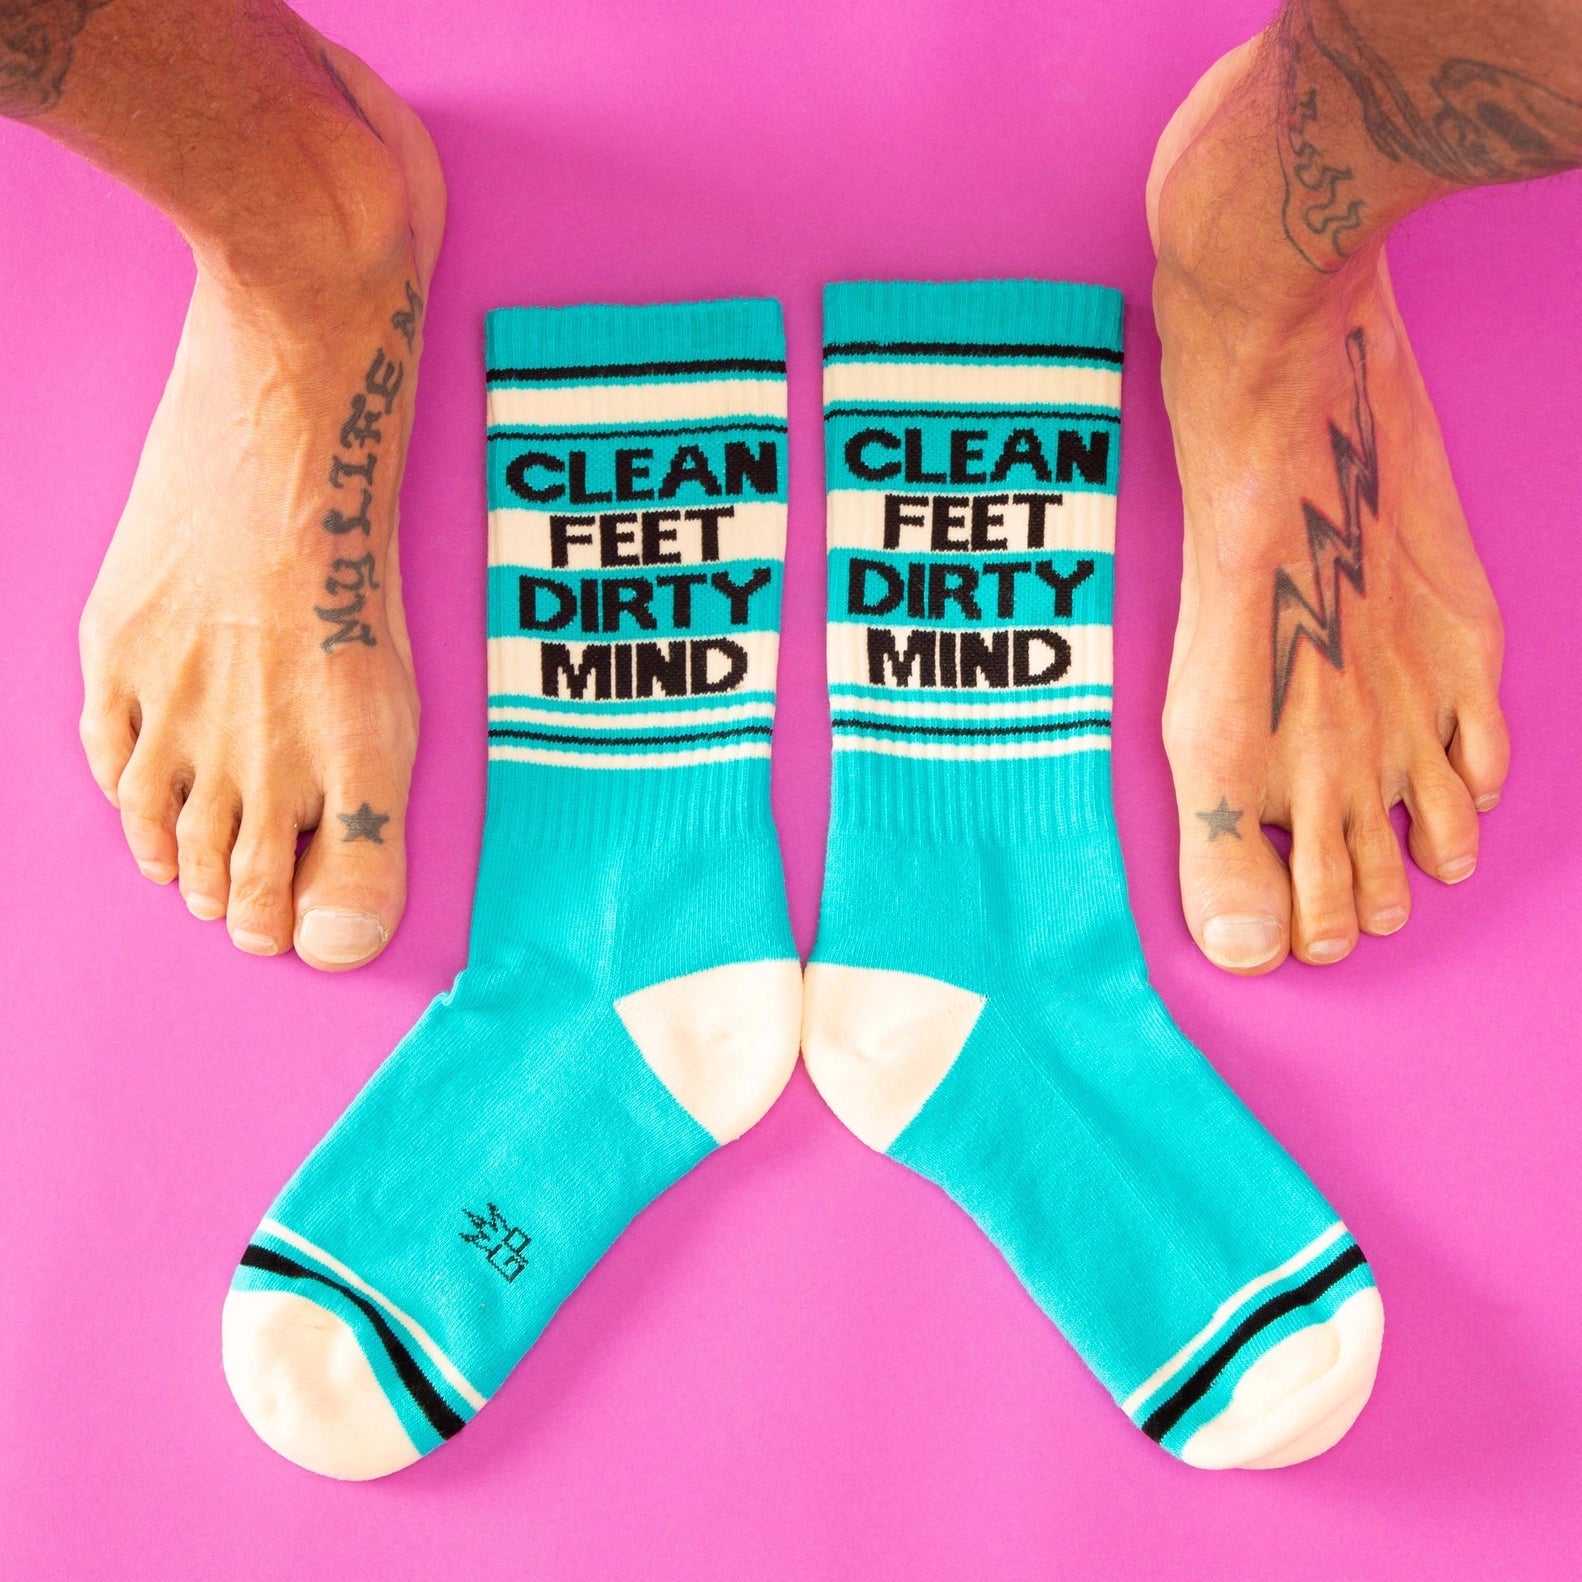 Clean Feet Dirty Mind Crew Socks | Gym Socks | Unisex | Men's Women's